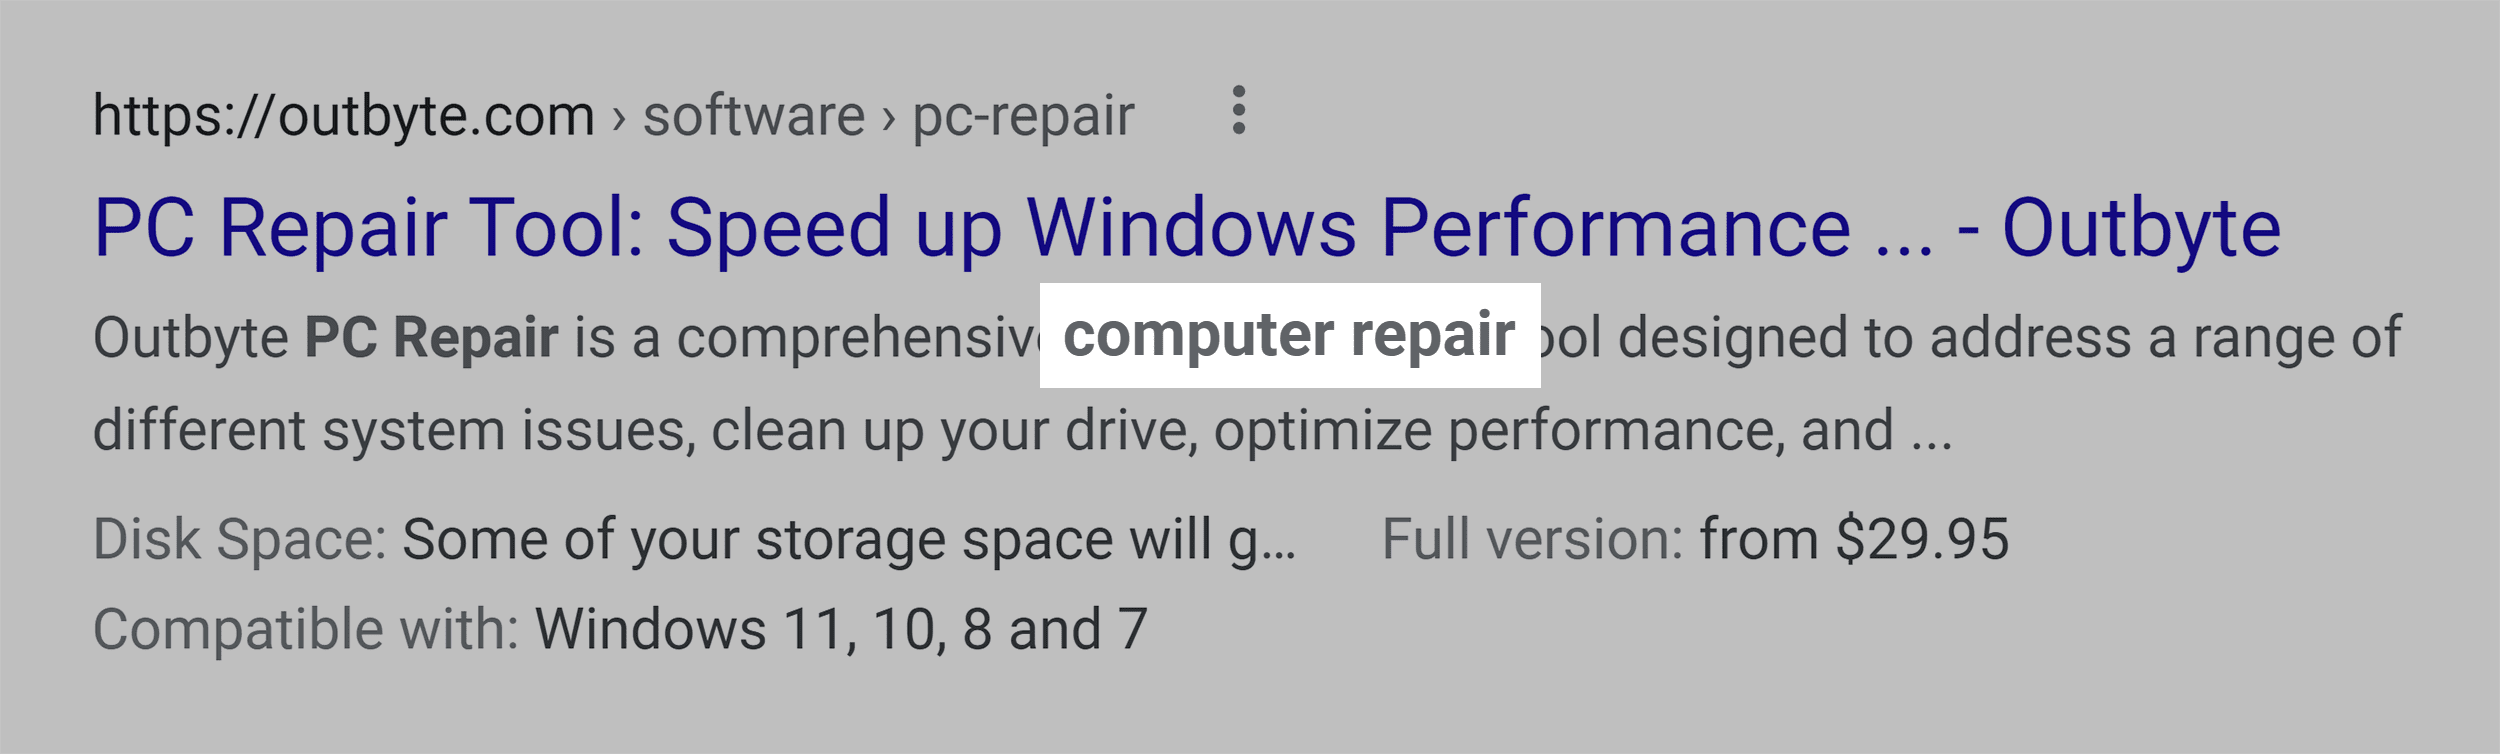 Computer repair bolded in SERP